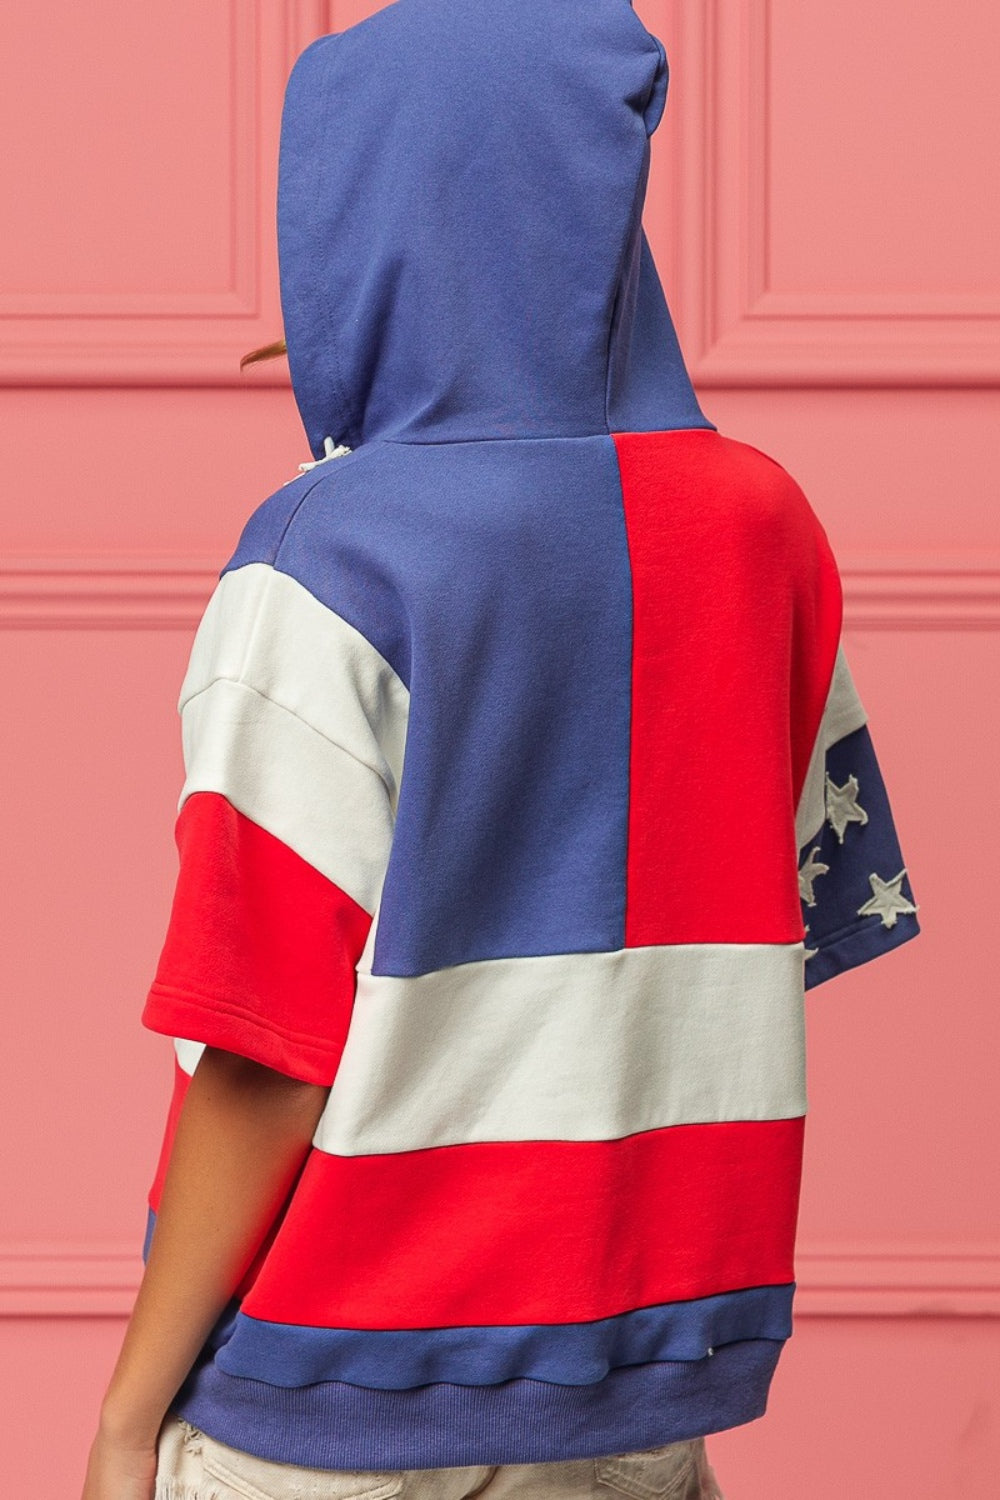 BiBi American Flag Theme Hoodie | Graphic Hoodie Women